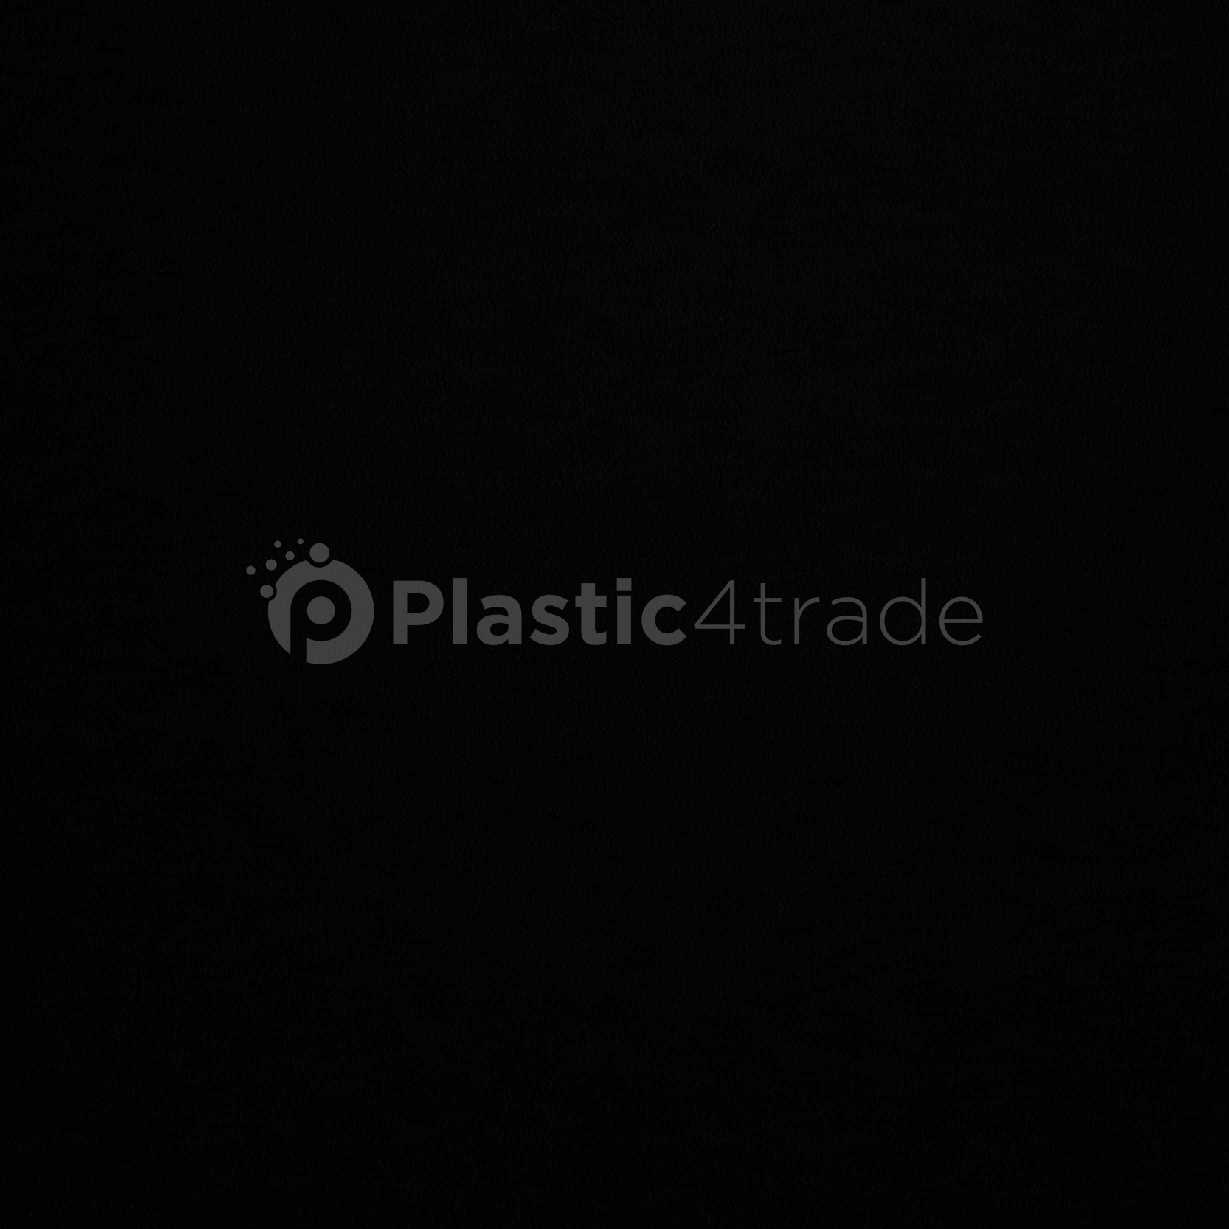 M12RR PP Prime/Virgin Injection Molding karnataka india Plastic4trade